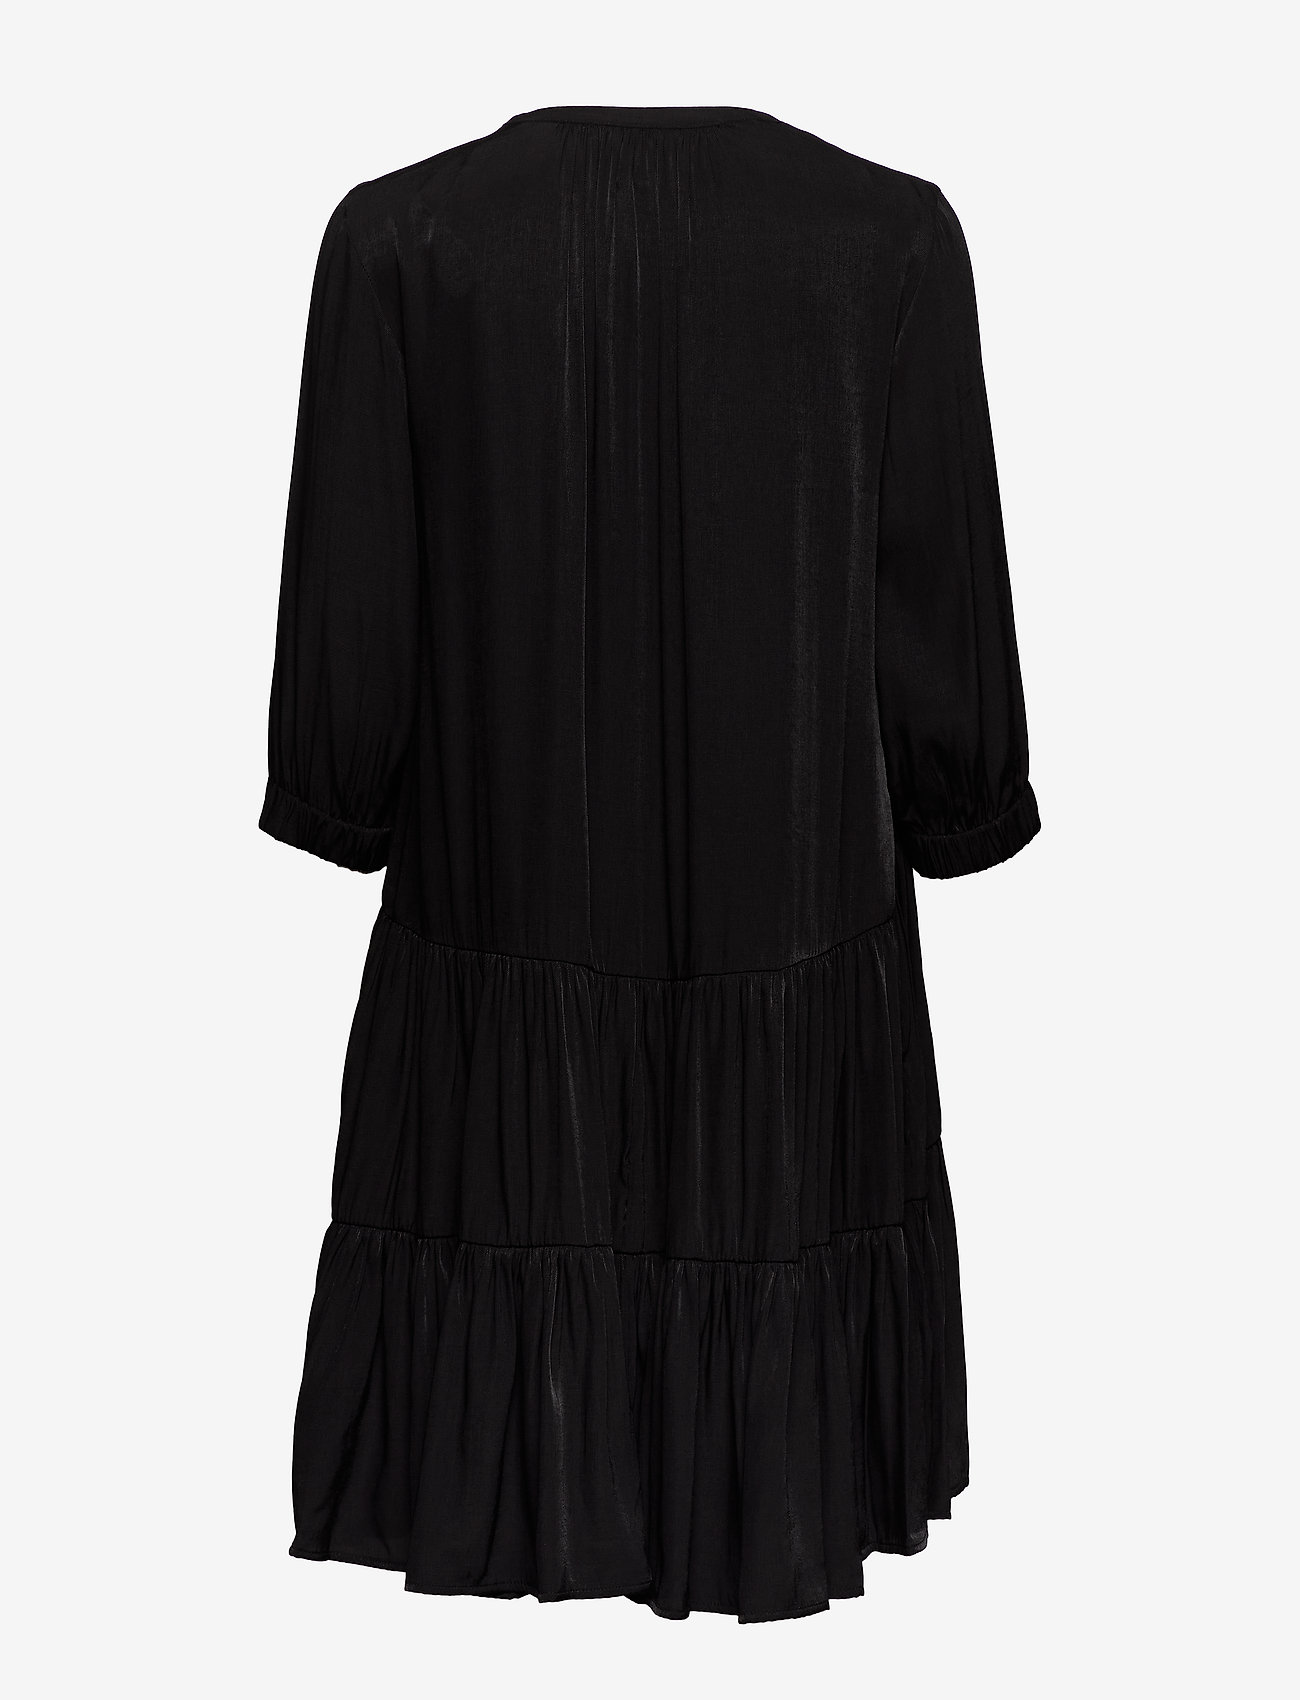 Dress Zara (Black) (34.99 €) - Lindex 